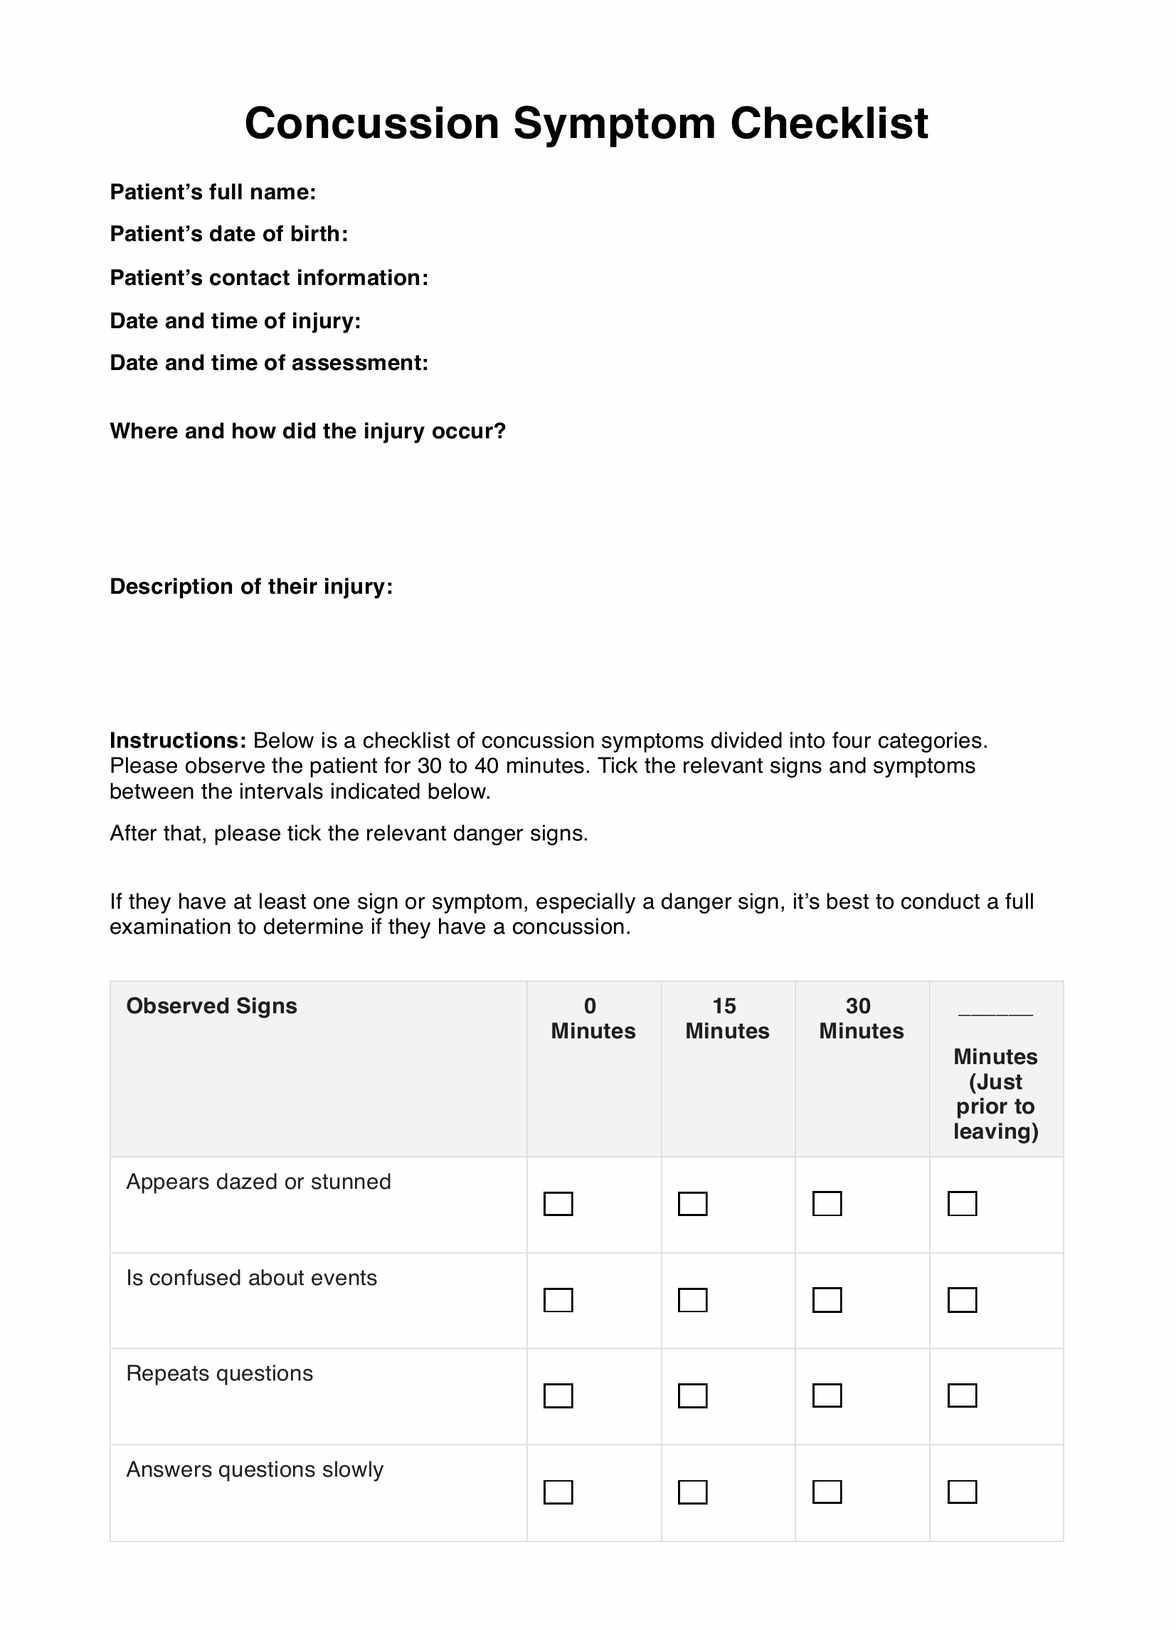 Concussion Symptom Checklist PDF Example